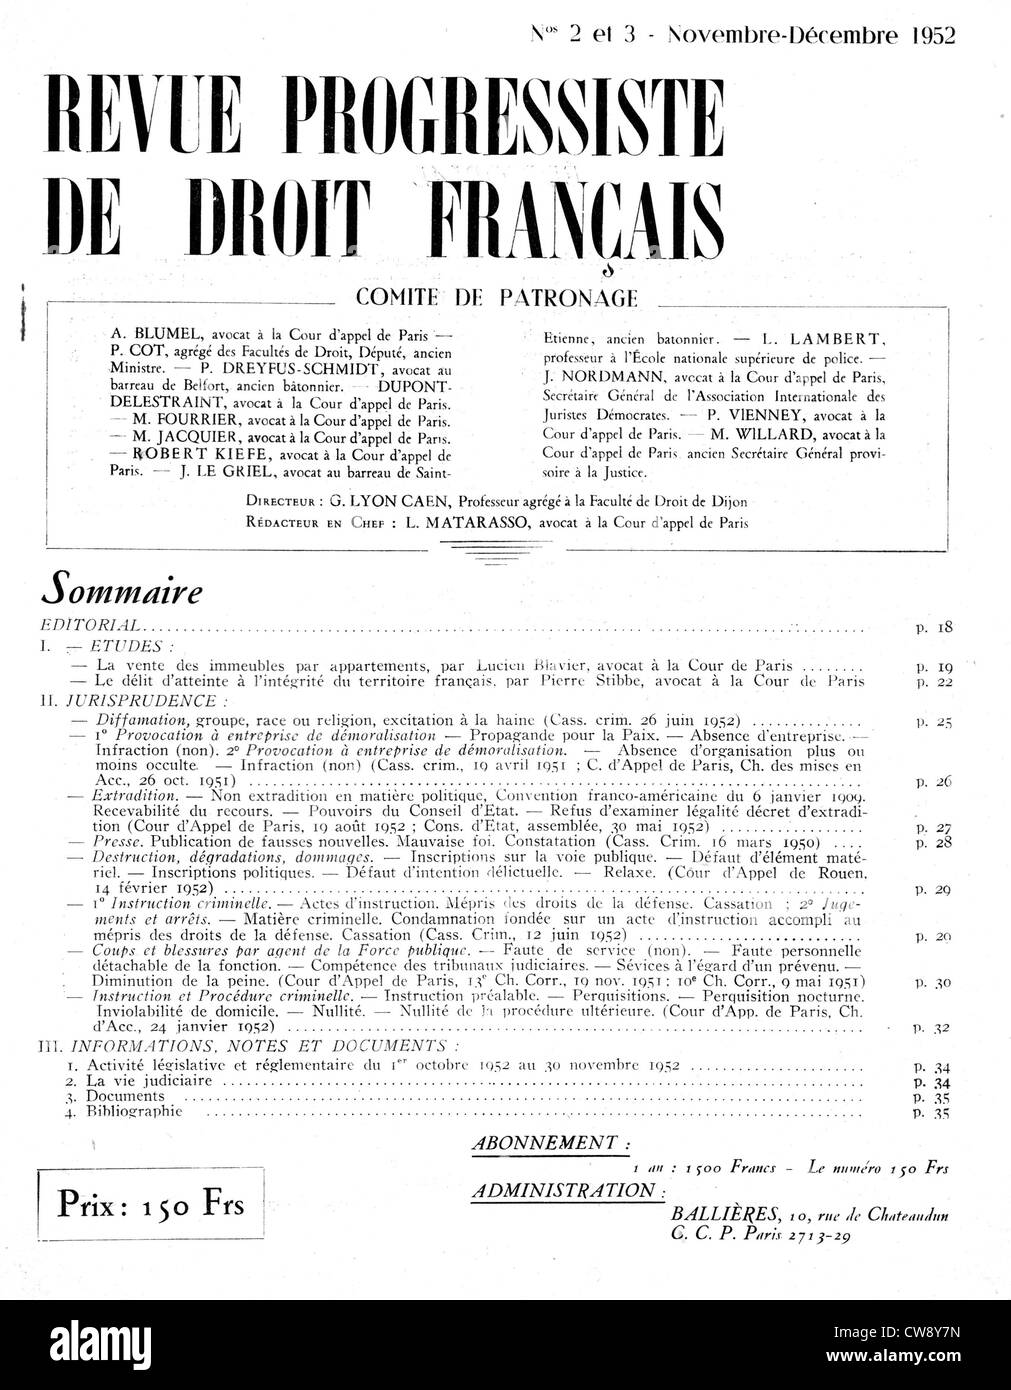 Seite 1 Nr. 2 & 3 "Revue Progressiste de Droit Français" Stockfoto